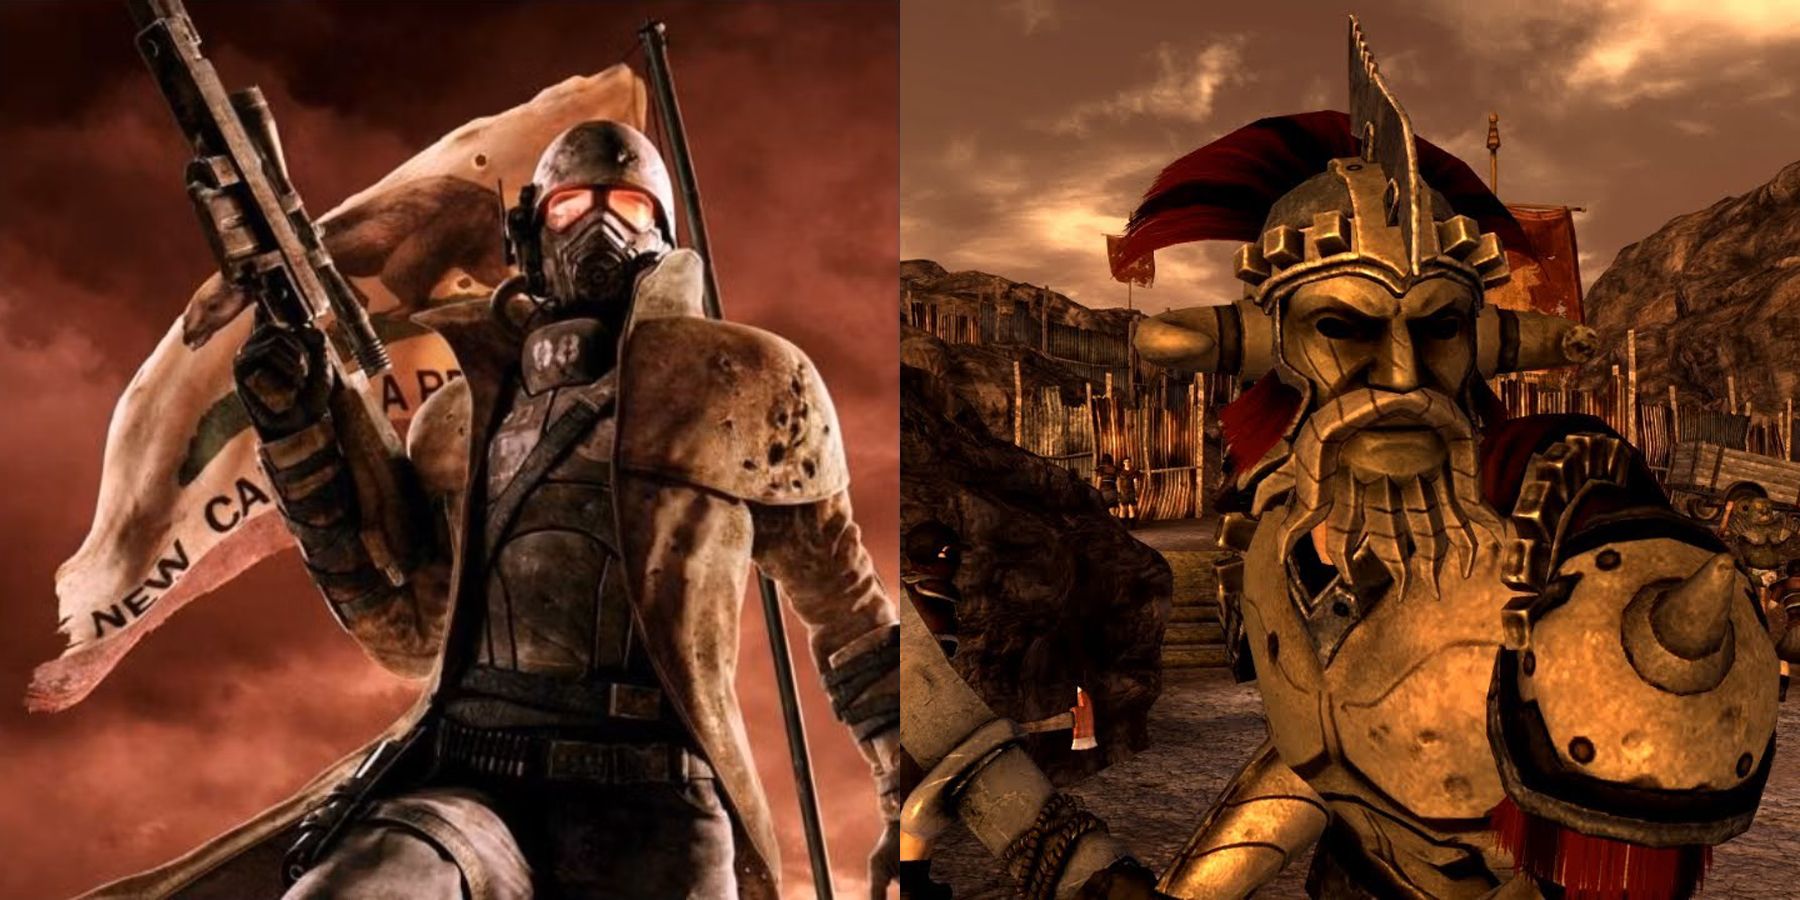 Fallout: New Vegas NCR Vetran Ranger and Legate Lanius